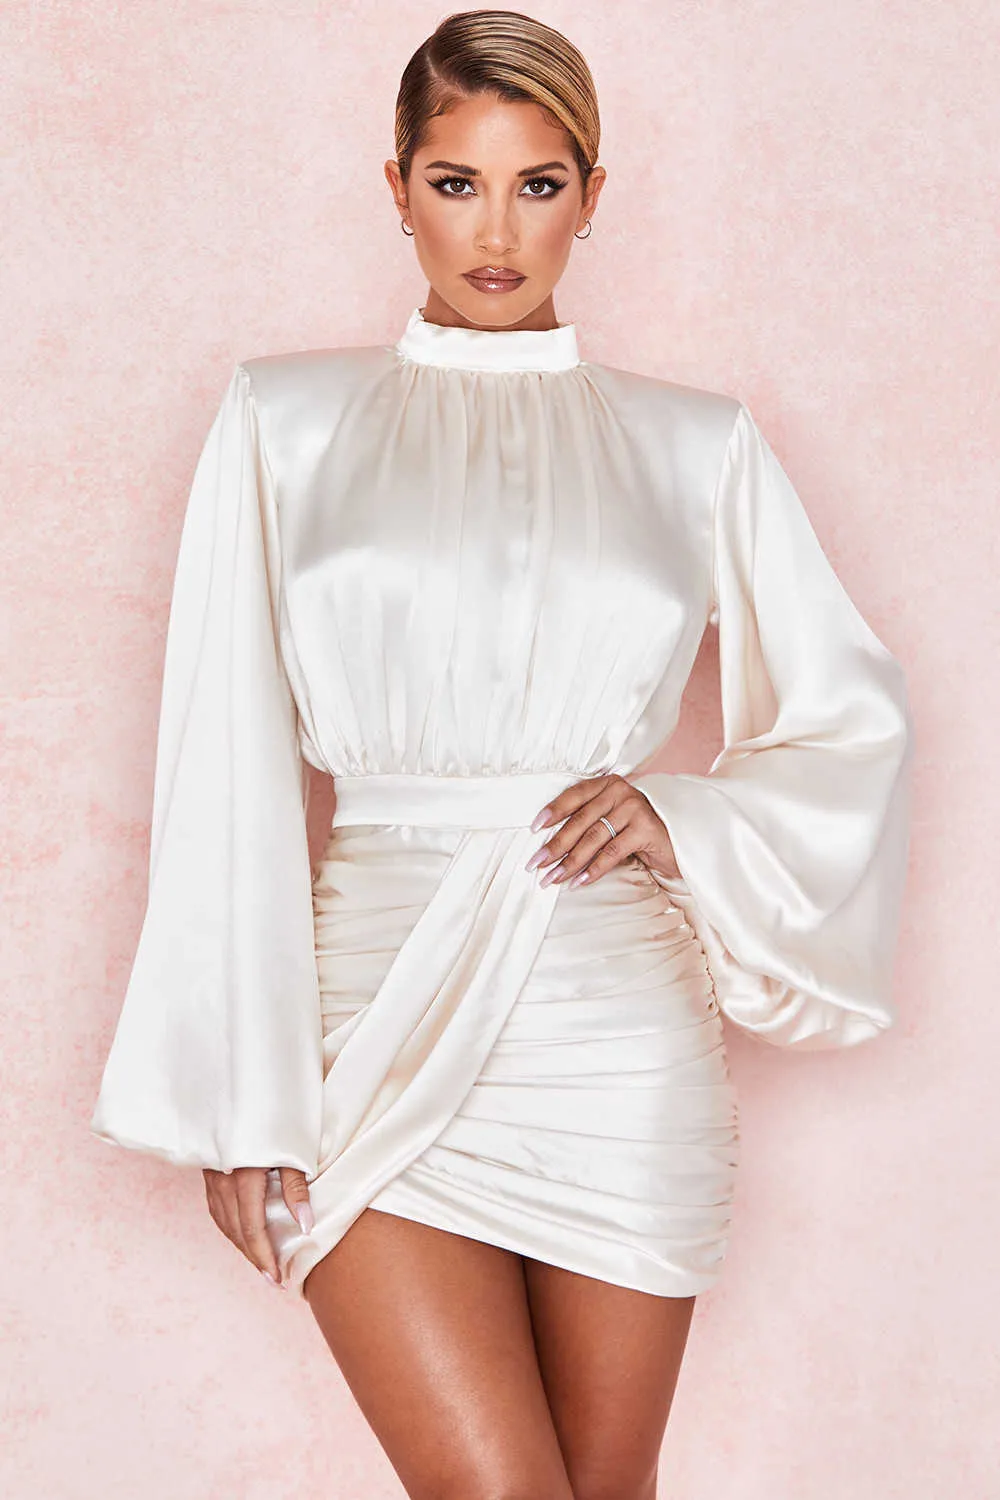 2021 Summer Women's Black And White Lantern Sleeve Bag Hip Pleated Mini Skirt Sexy Nightclub Dress S-XL Size Y1006